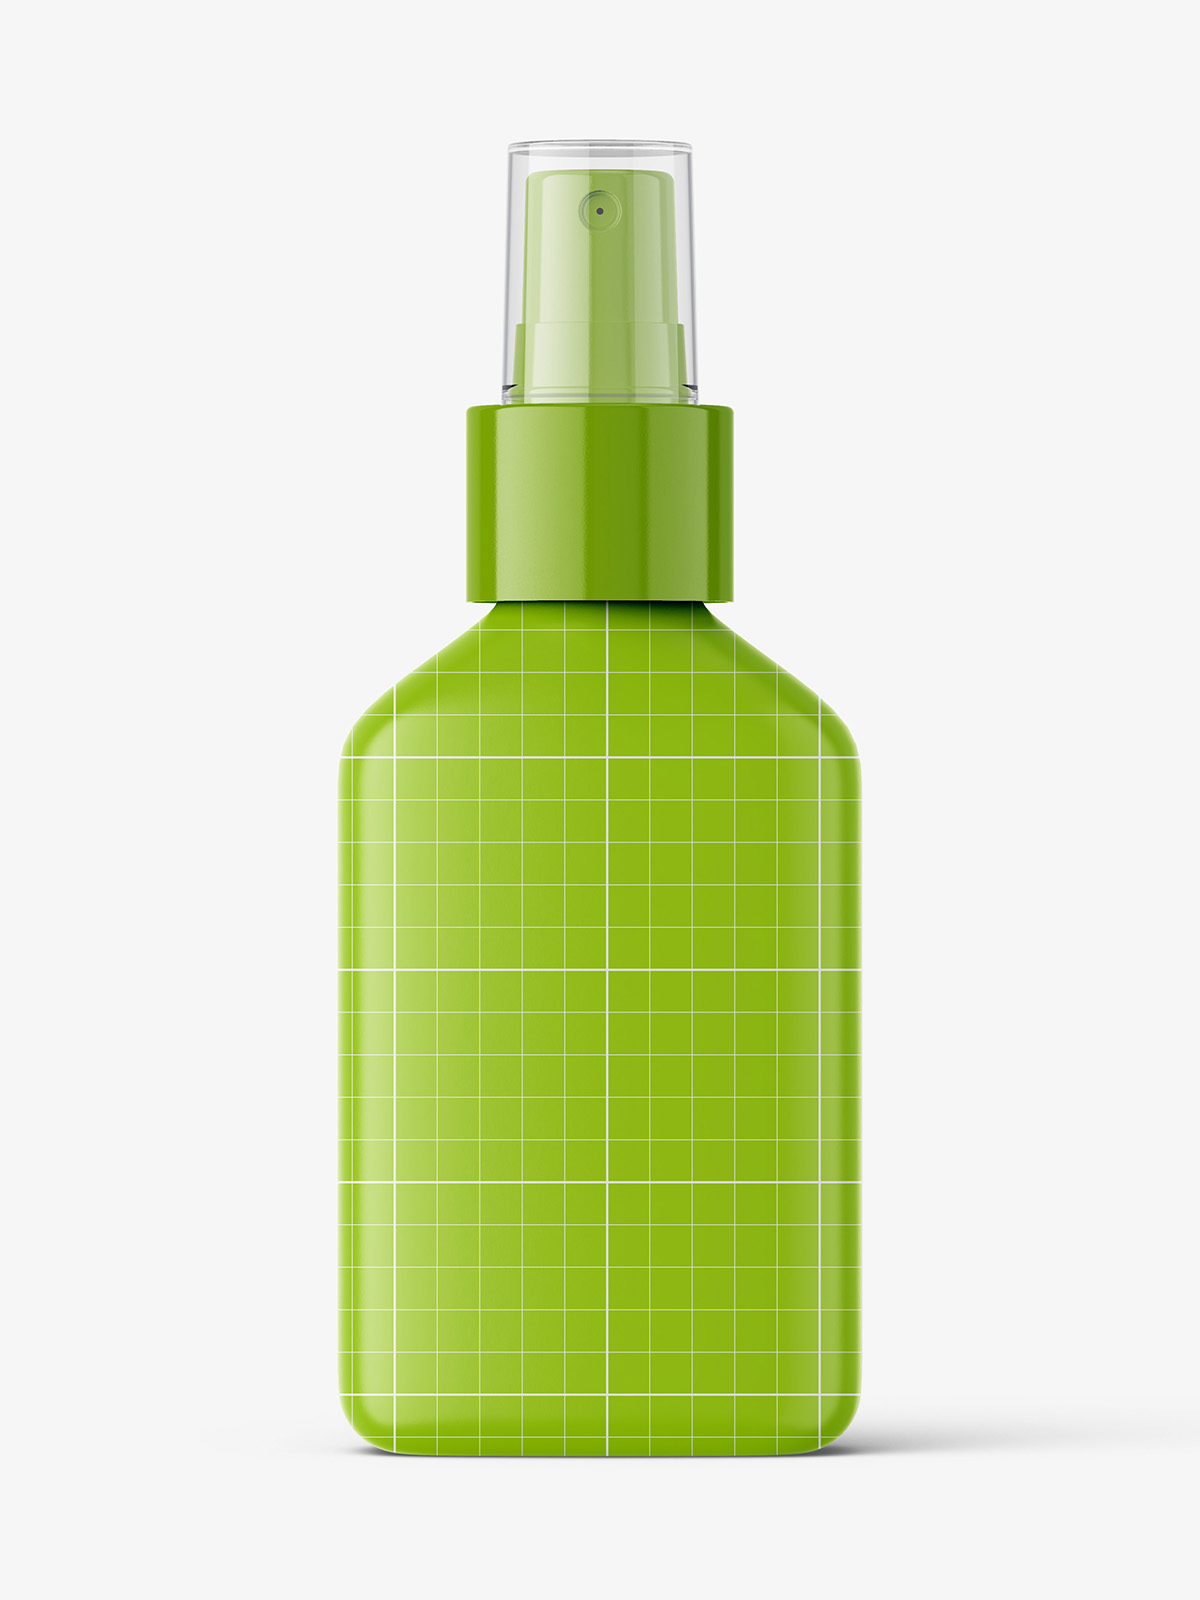 Download Square bottle with atomizer mockup / gel - Smarty Mockups